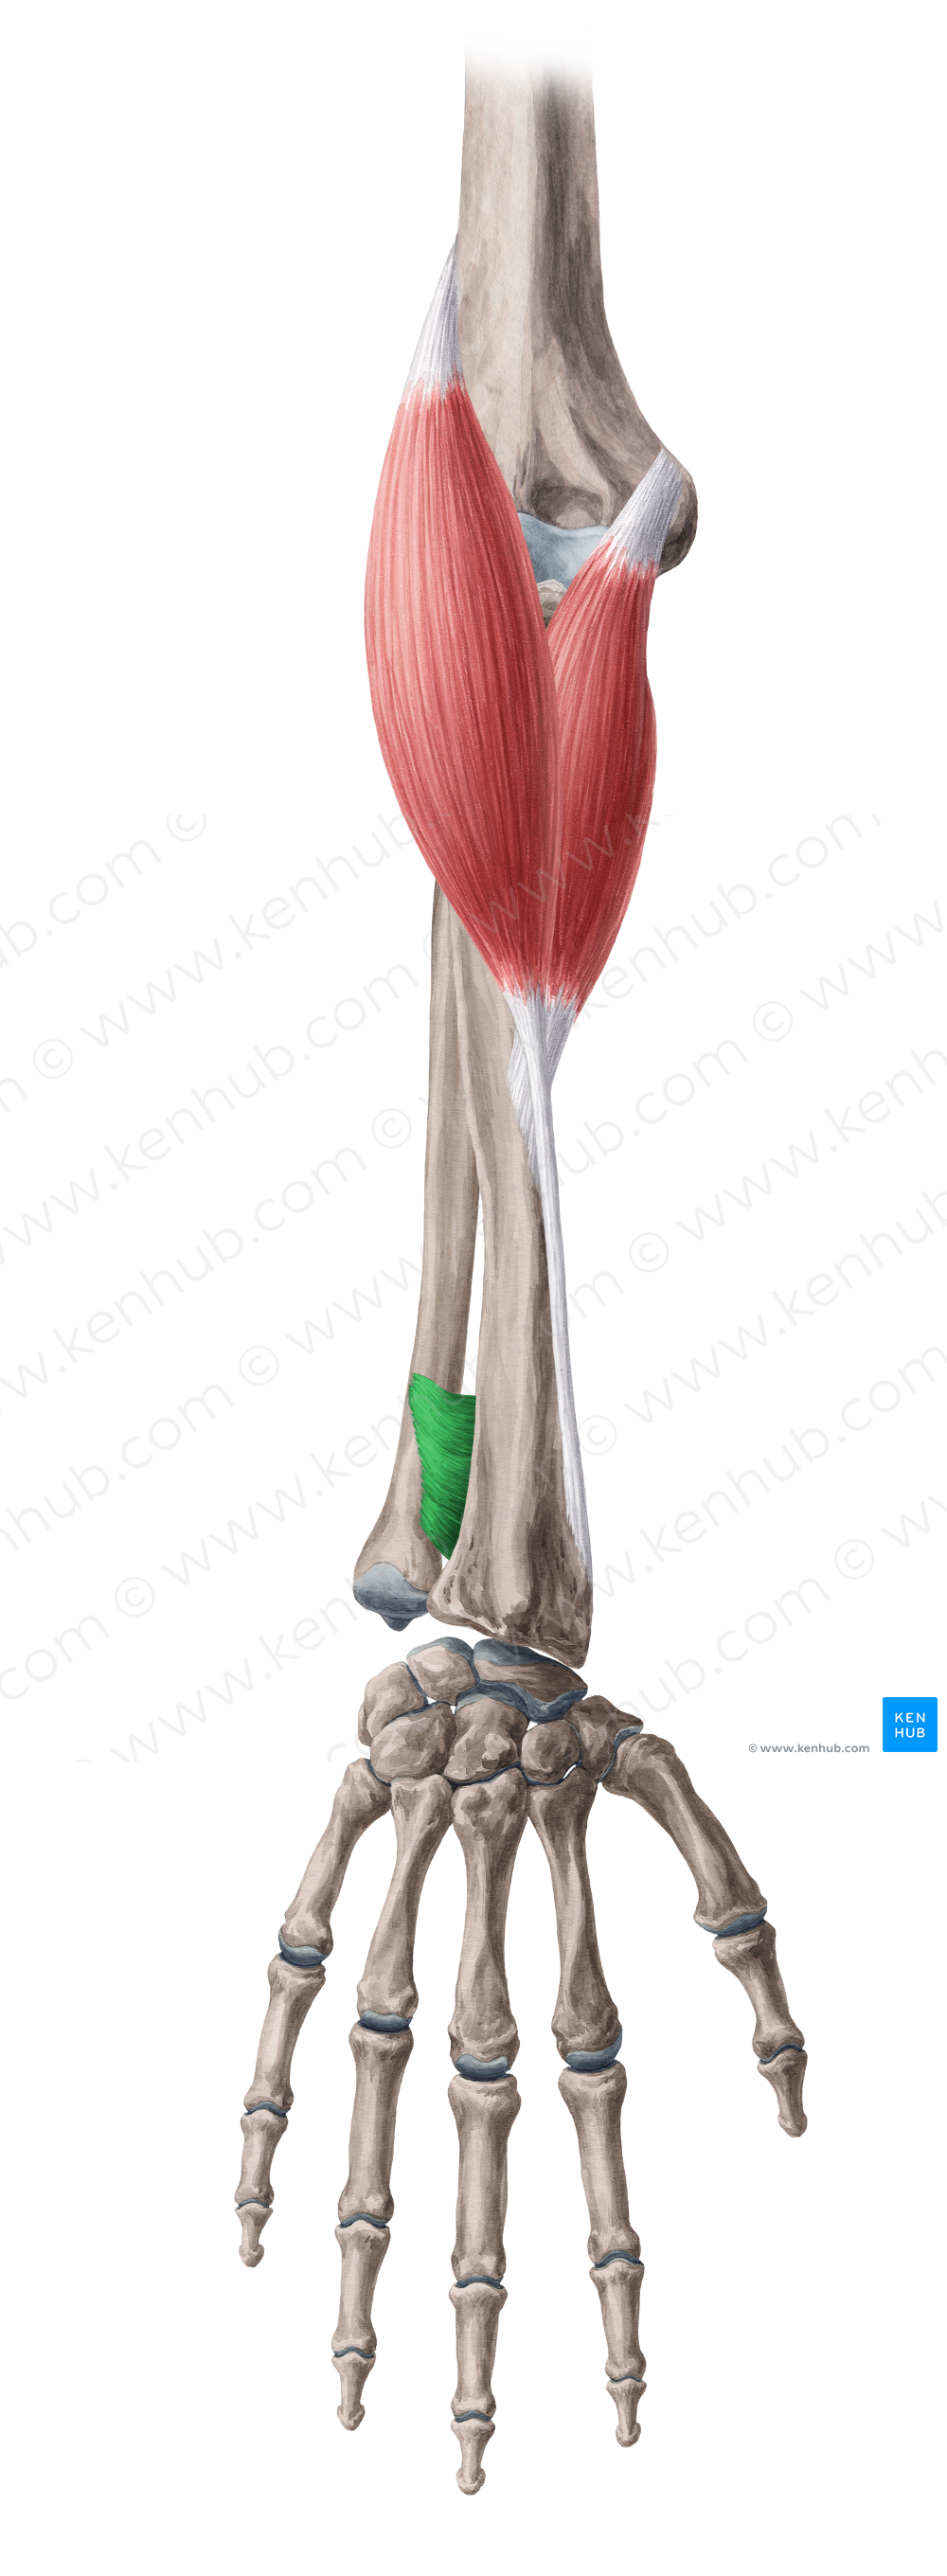 Pronator quadratus muscle (#5772)